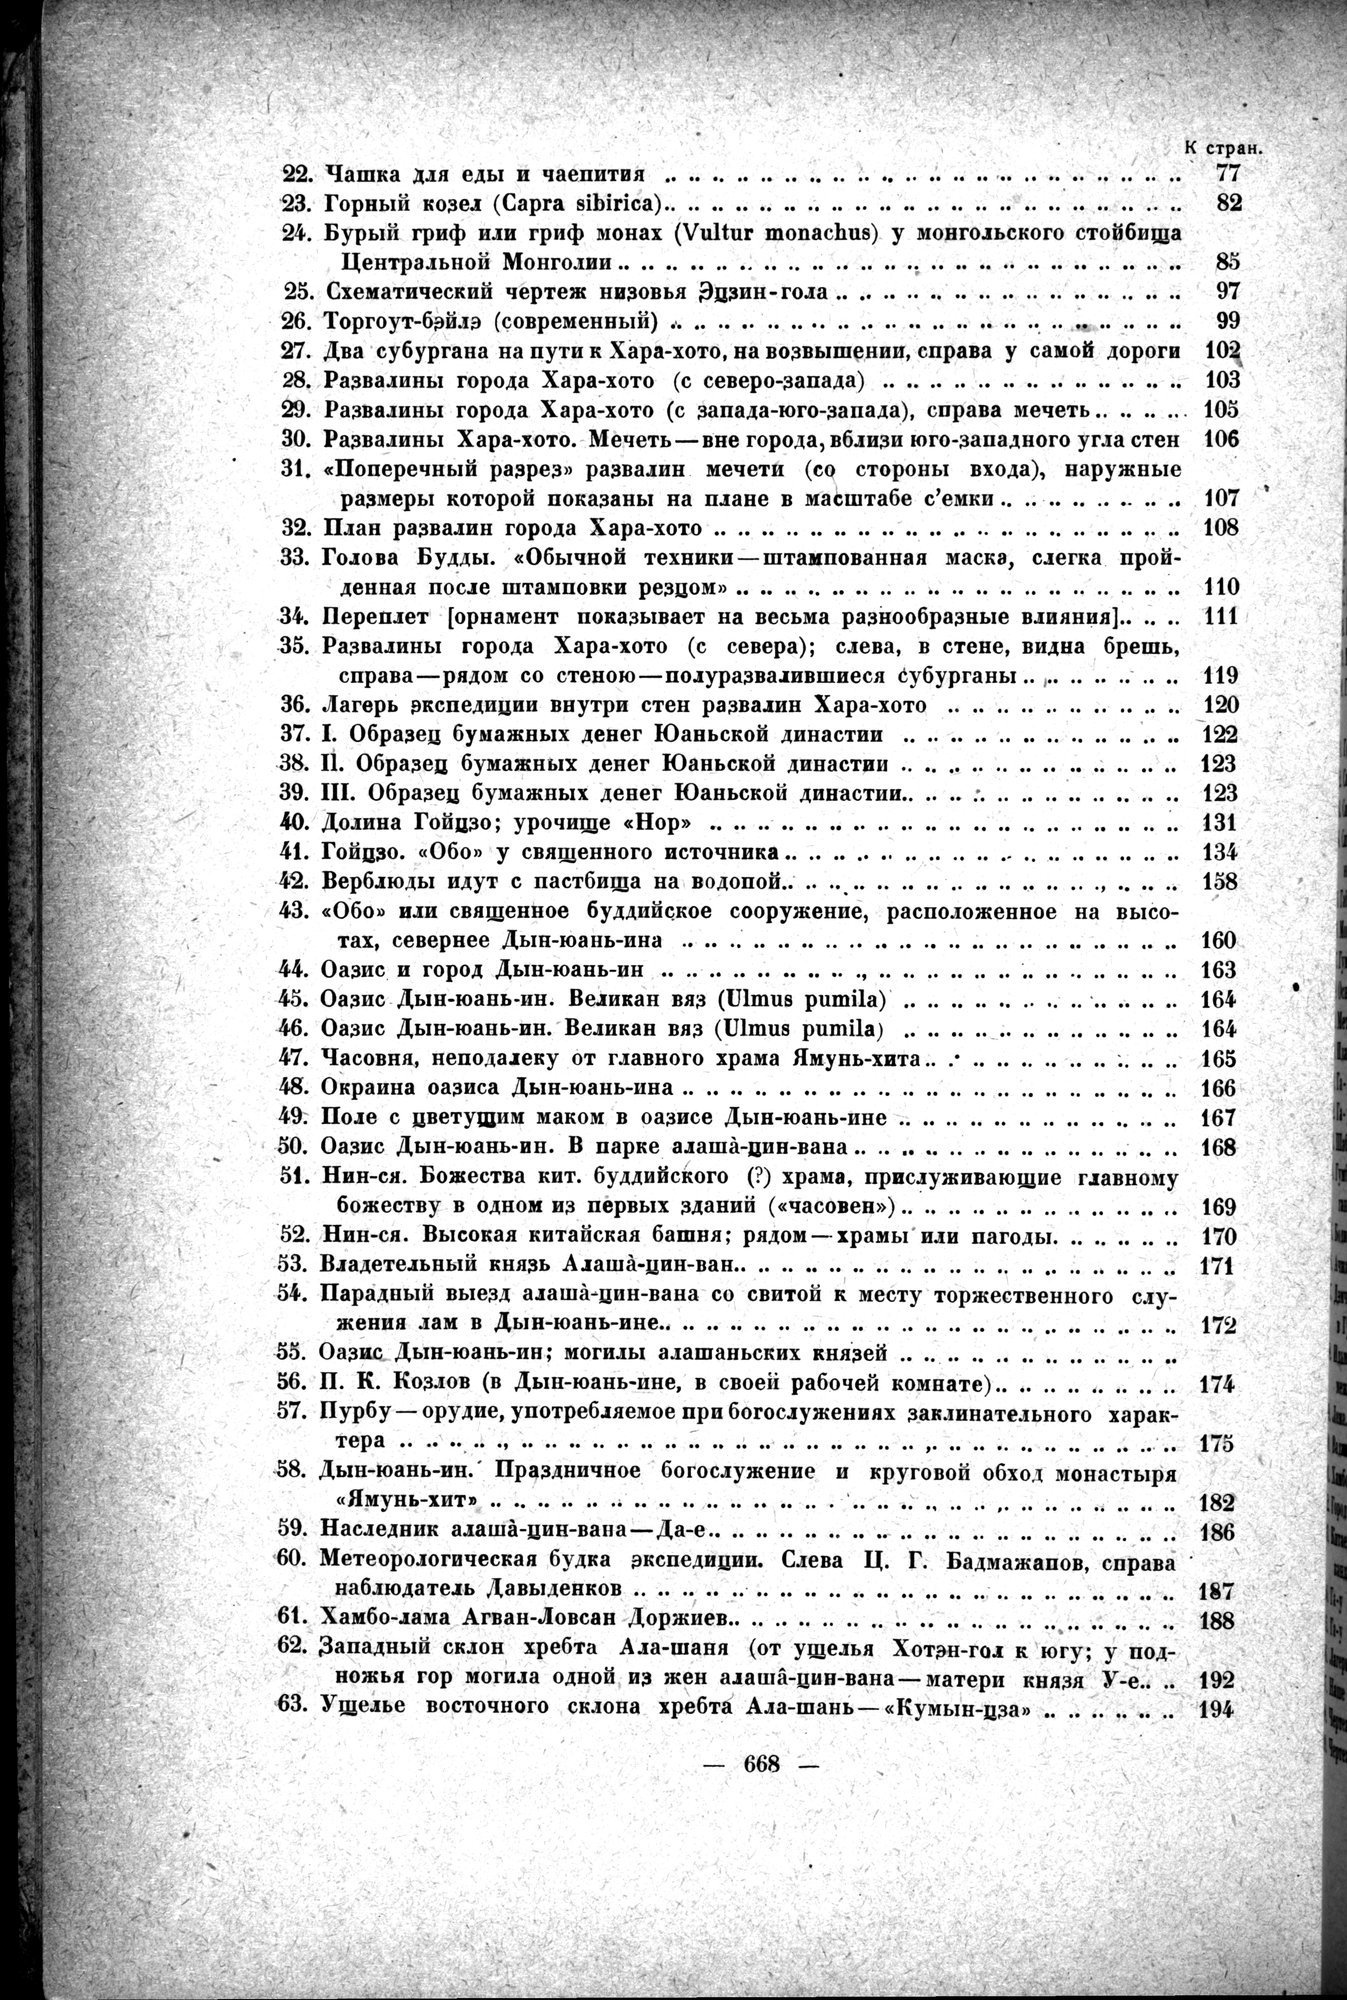 Mongoliya i Amdo i mertby gorod Khara-Khoto : vol.1 / Page 758 (Grayscale High Resolution Image)